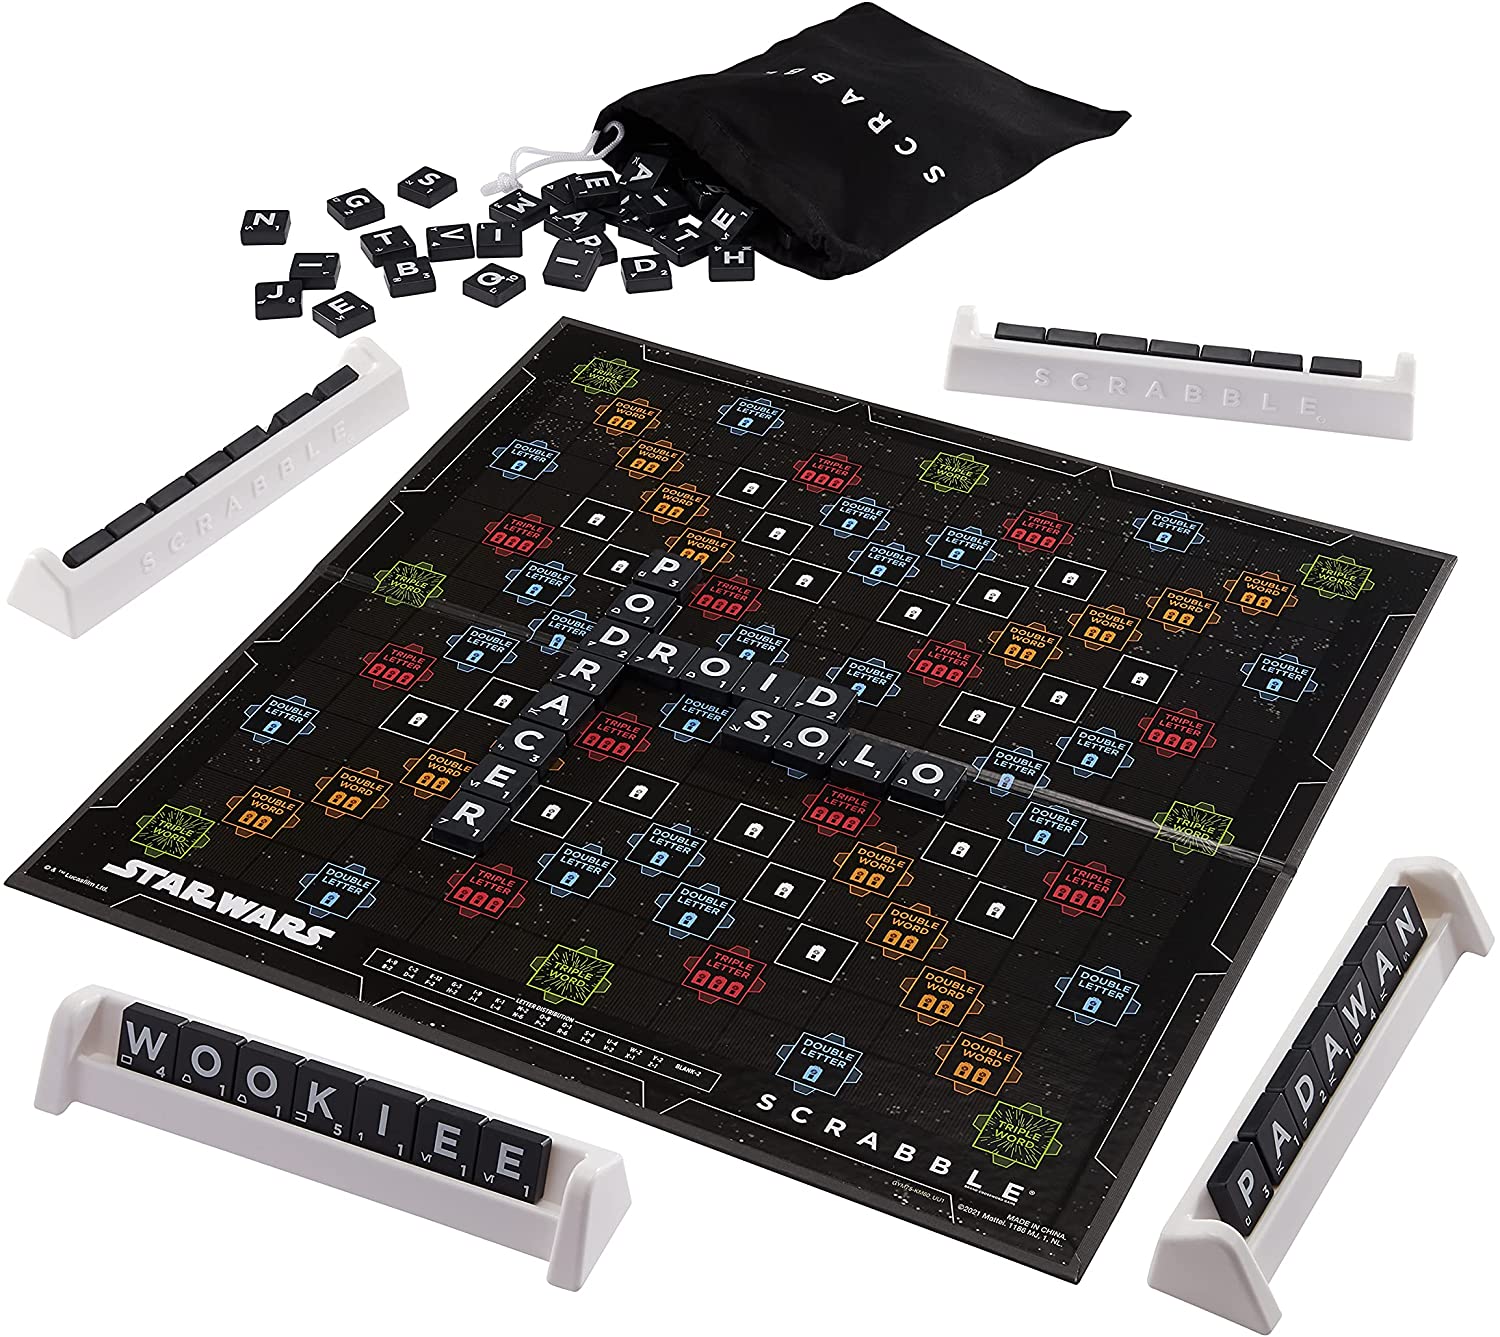 Star Wars Scrabble boardgame